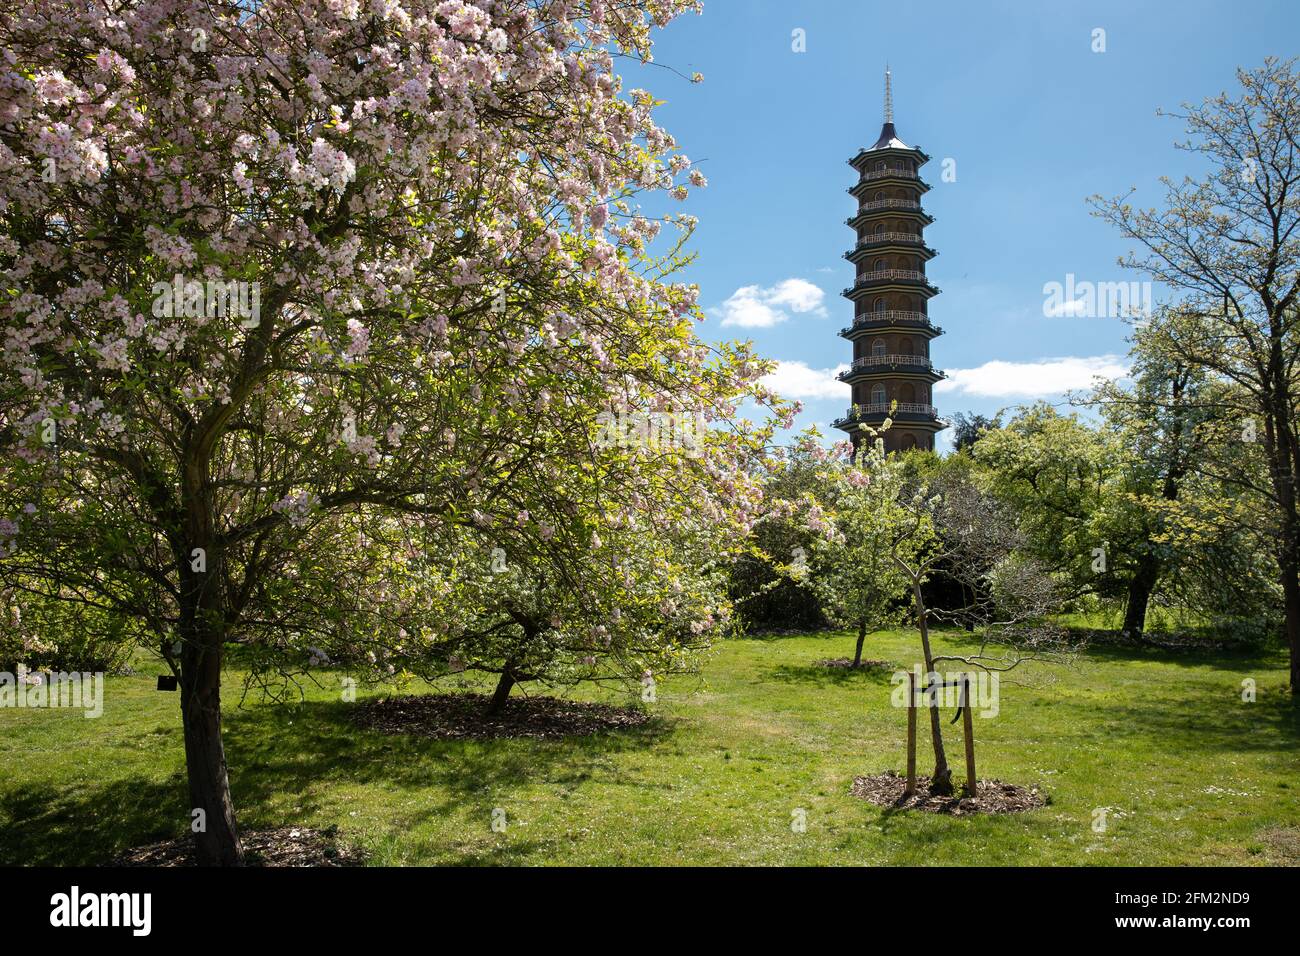 The Great Pagoda, Kew Royal Botanic Gardens, London, Uk Stock Photo